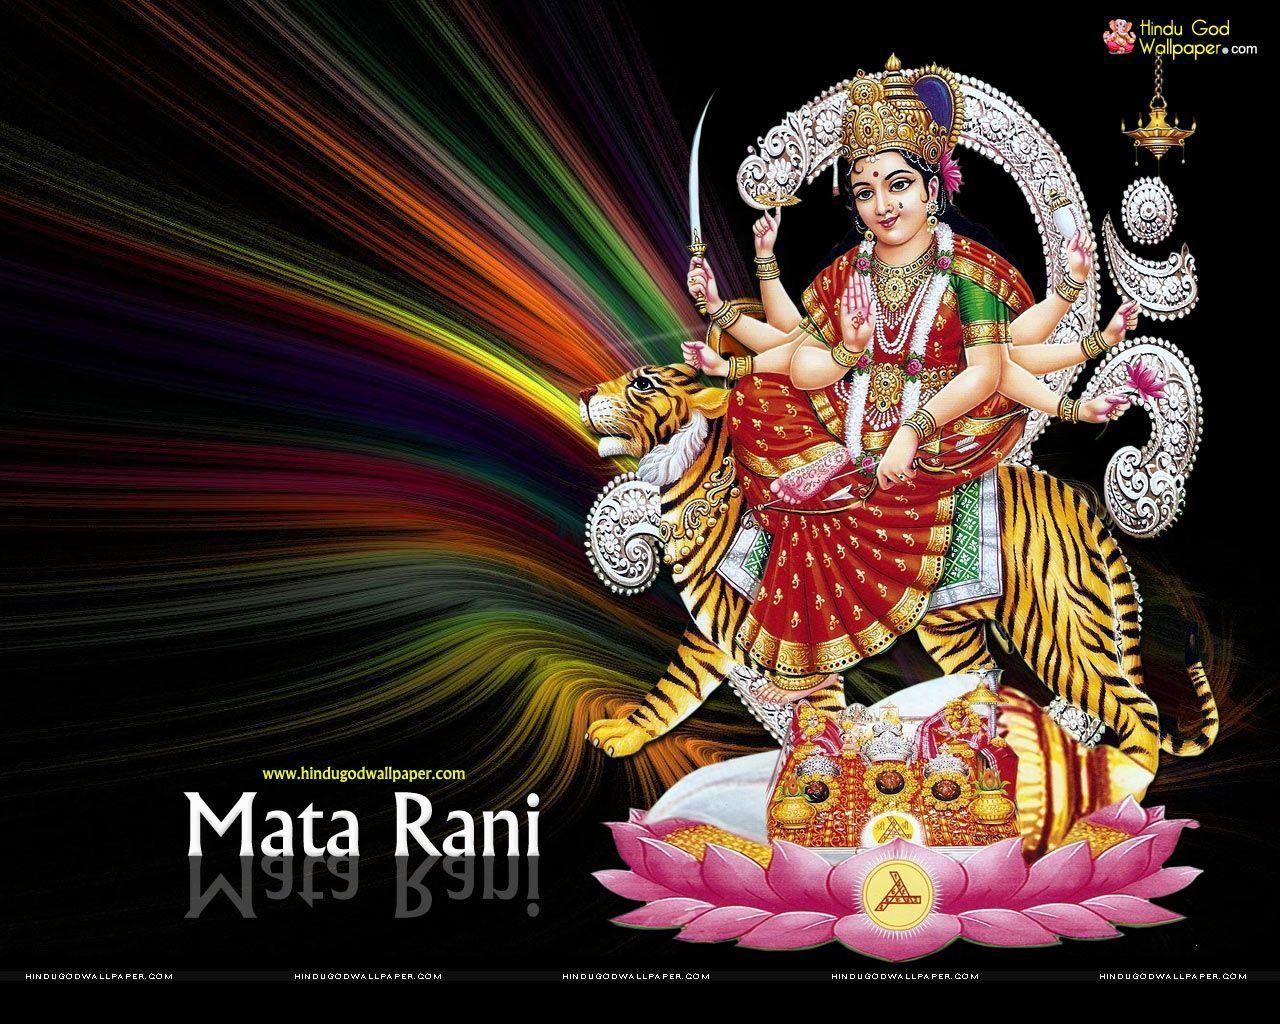 Mata Rani HD Wallpaper Free Download. Wallpaper free download